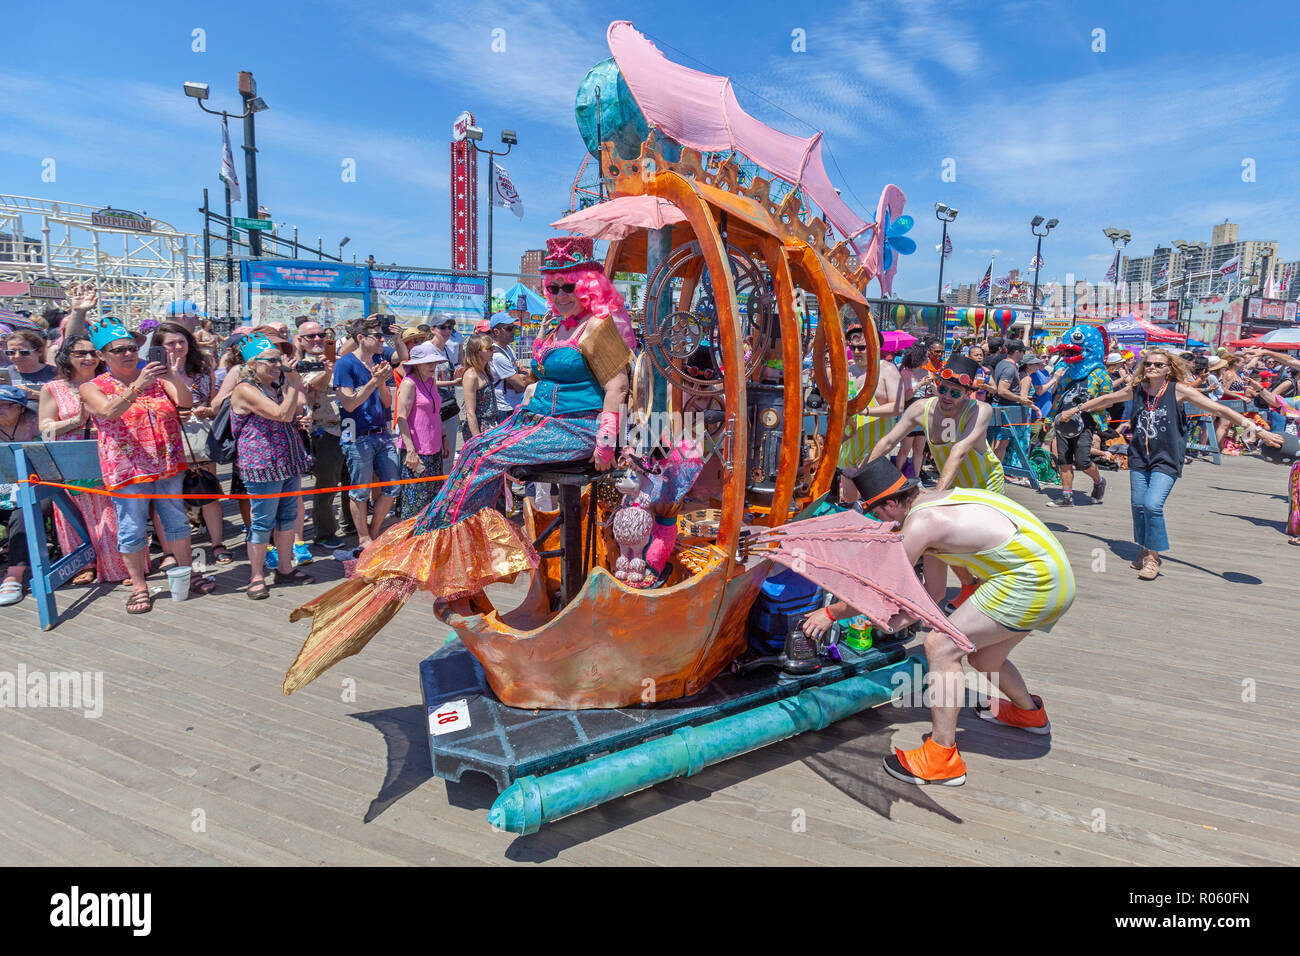 People having fun watching the Annual Mermaid Parade at Coney Island, Brooklyn, New York. Stock Photo